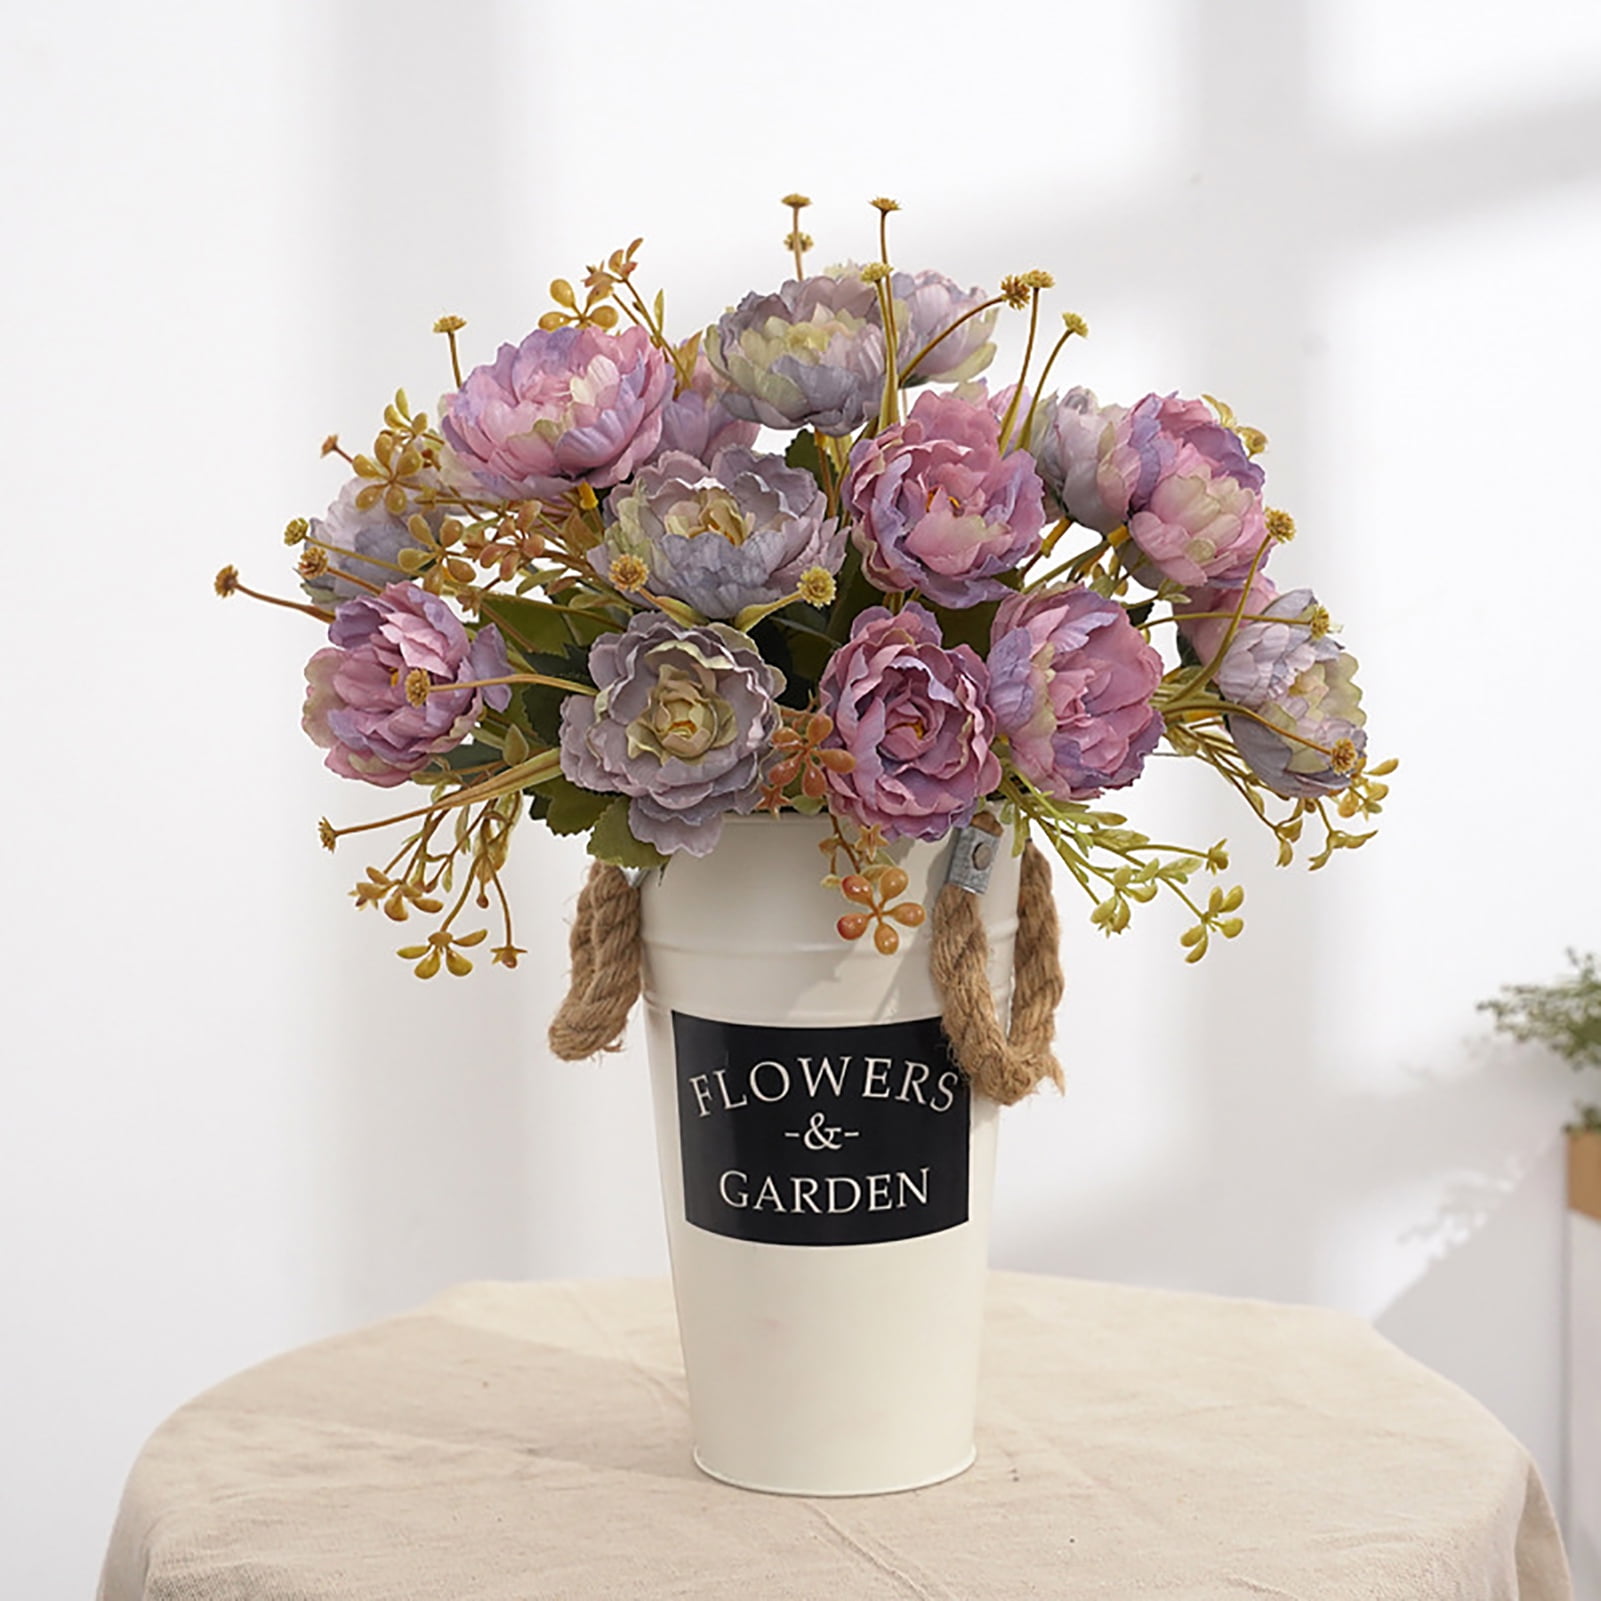 Details about   36HEADS ARTIFICIAL SILK FLOWER BUNCH Wedding Party Home Bouquet DIY#tvs